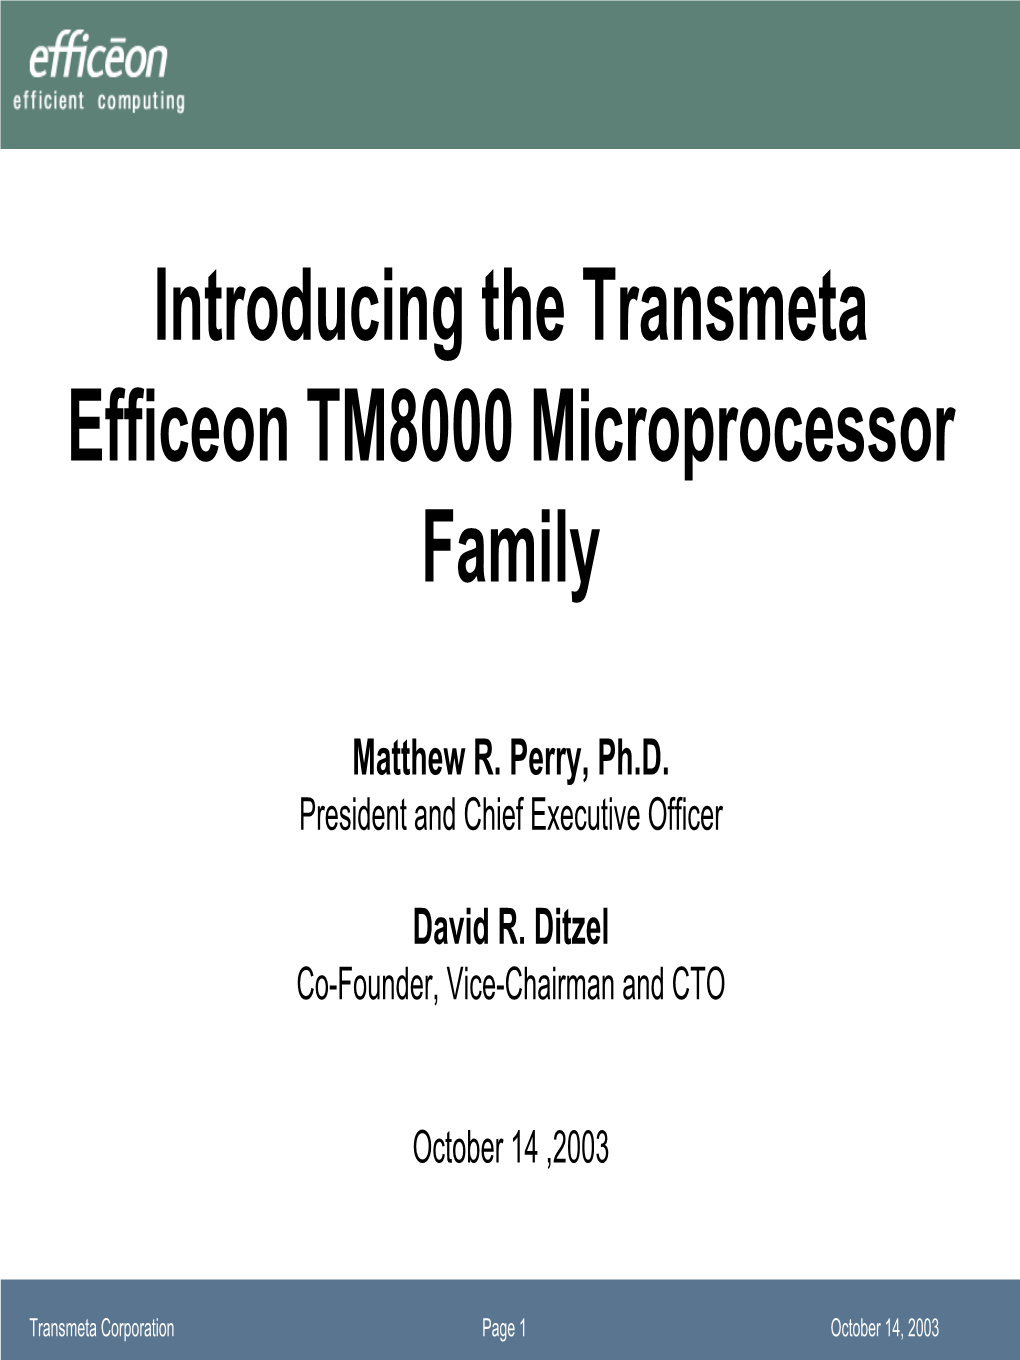 Introducing the Transmeta Efficeon TM8000 Microprocessor Family